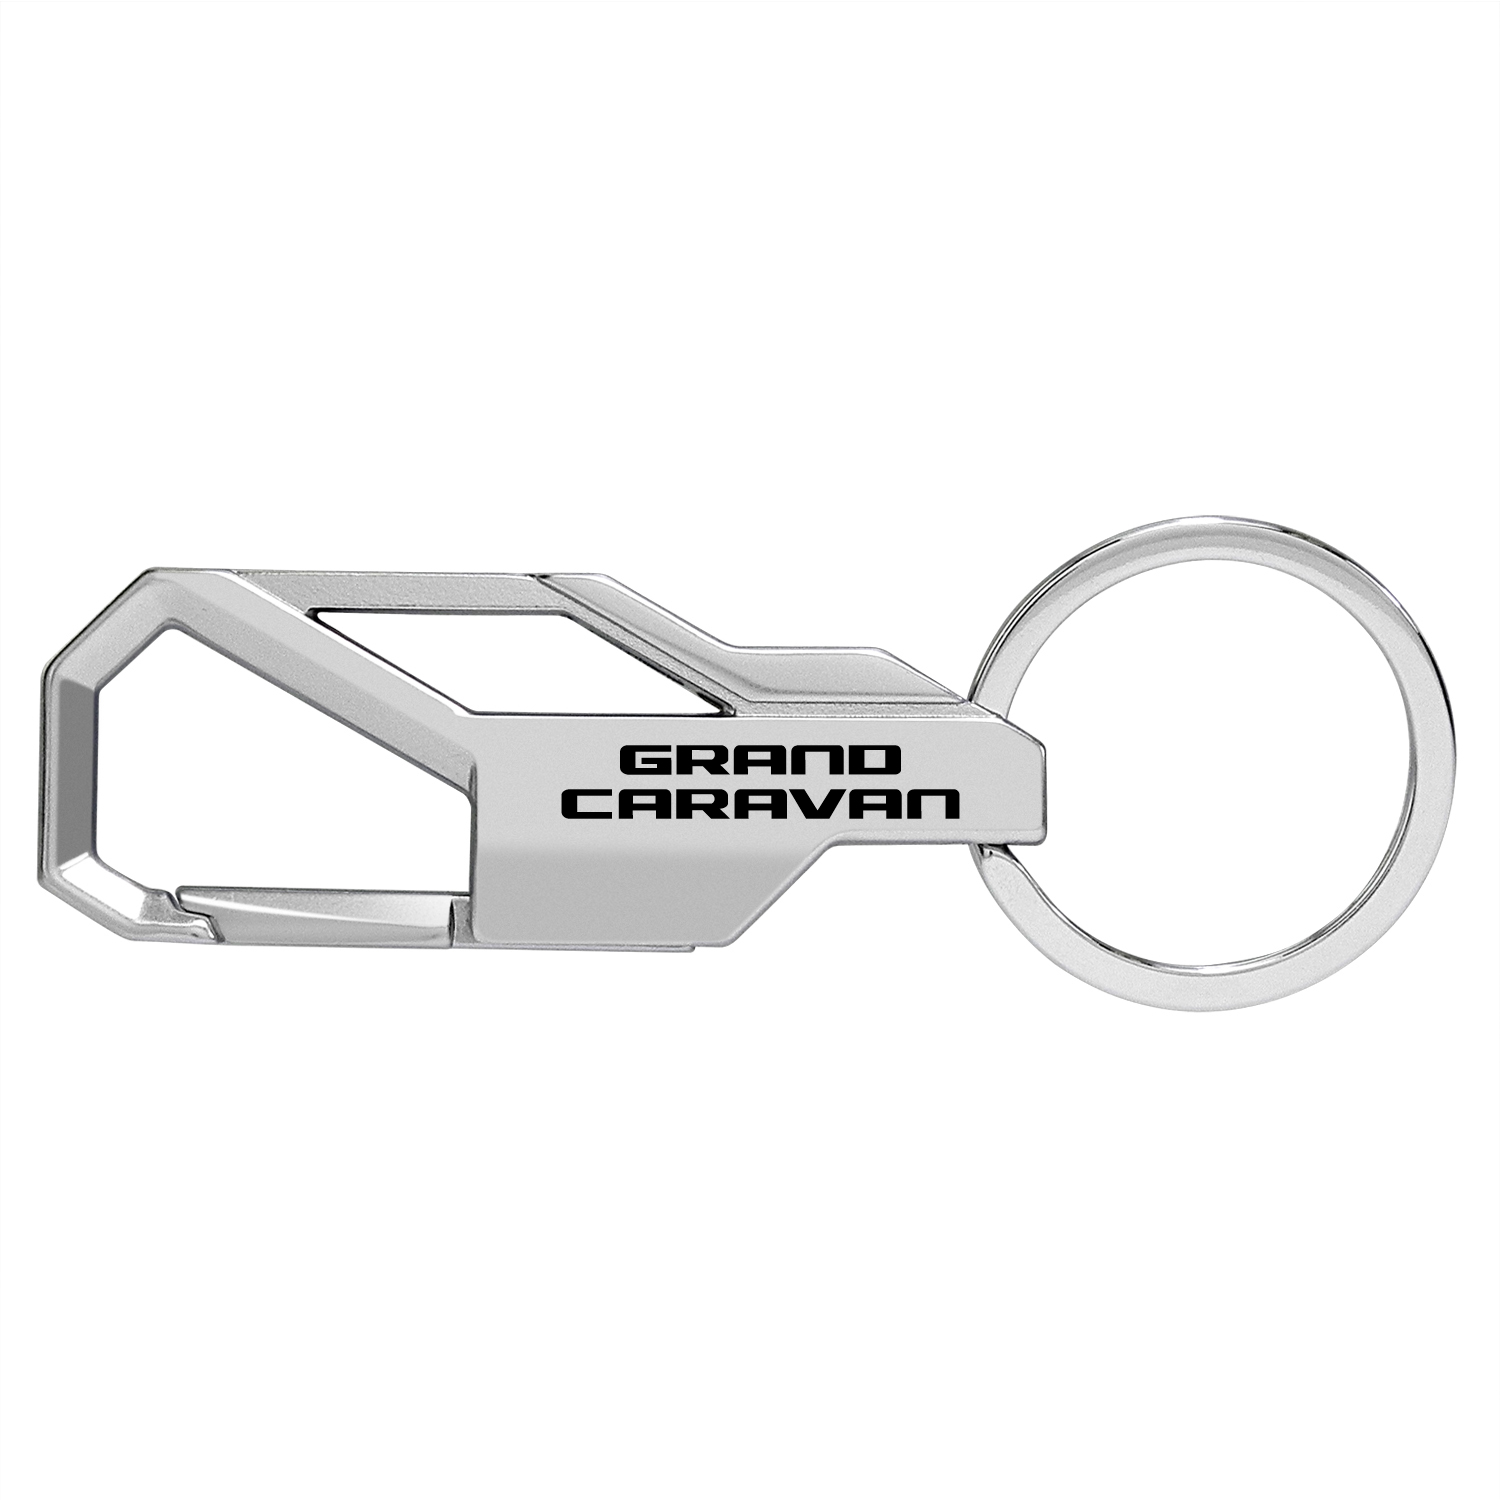 Dodge Grand Caravan Silver Carabiner-style Snap Hook Metal Key Chain Keychain